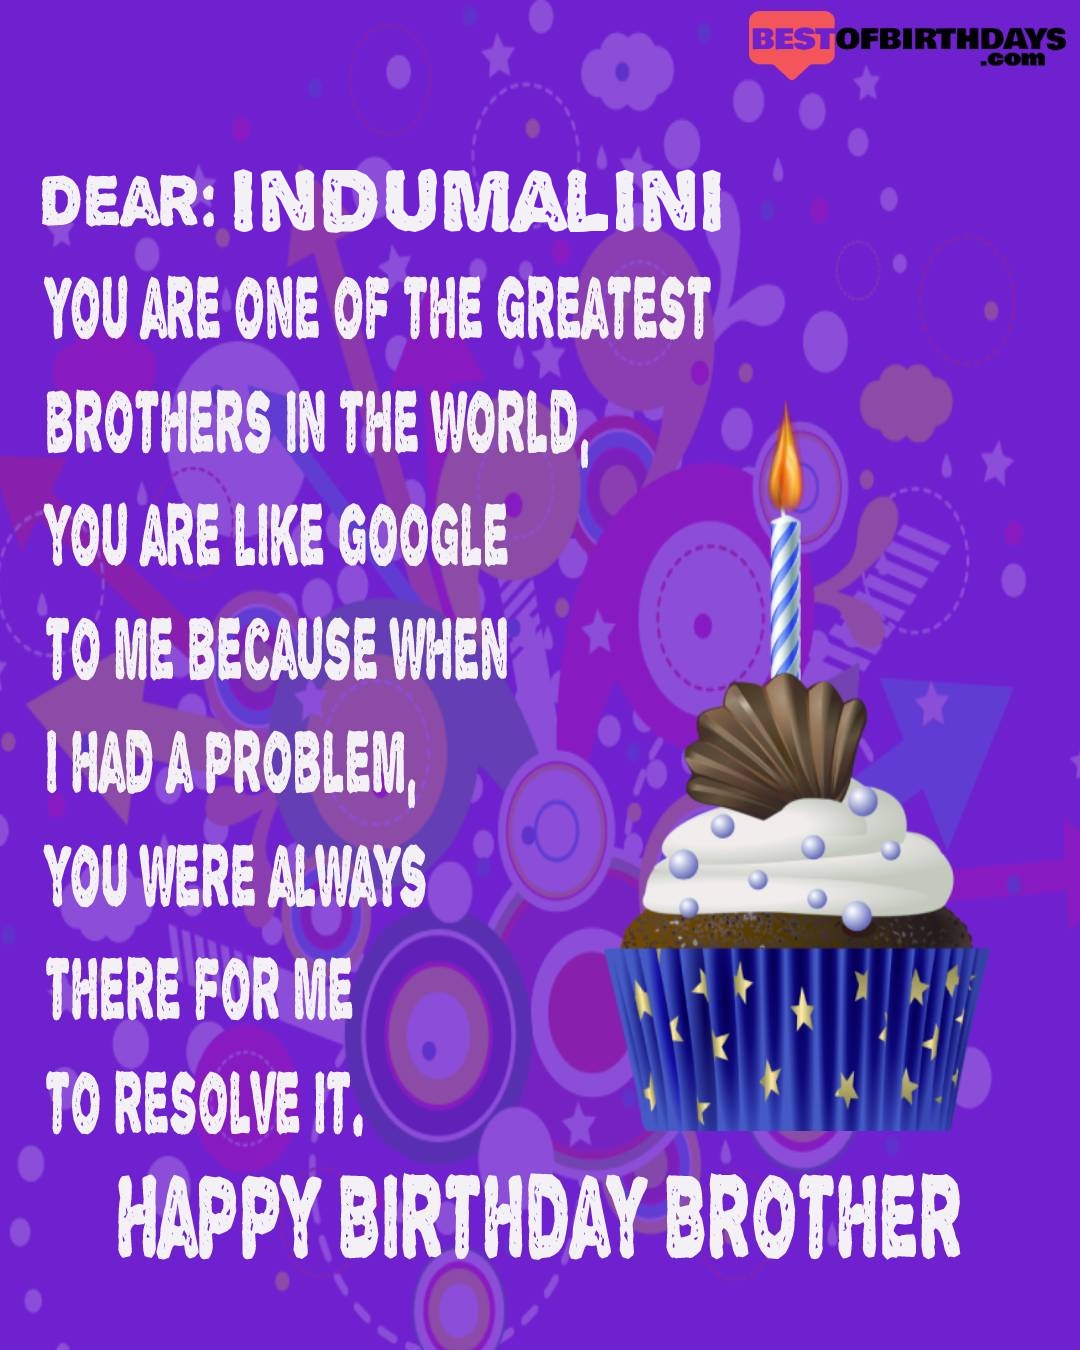 Happy birthday indumalini bhai brother bro